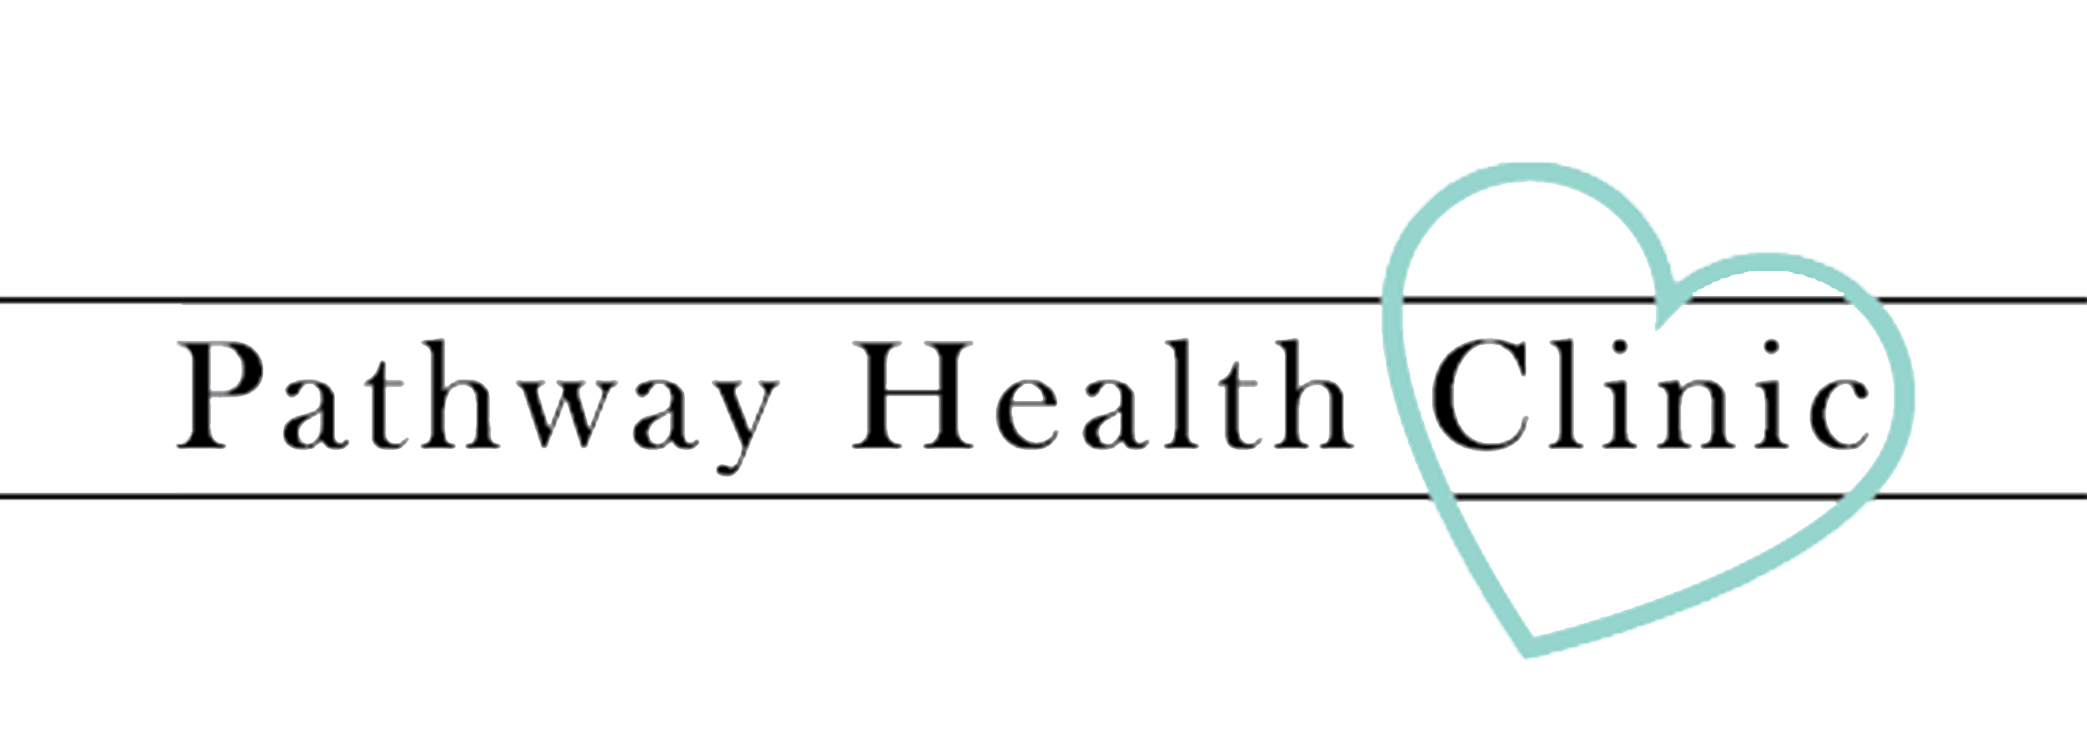 Pathway Health Clinic